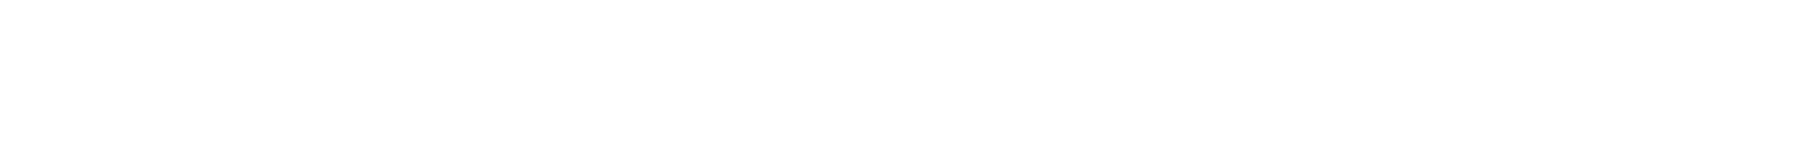 01319-Rubicon-Benefits-Logo-NoTag-WH